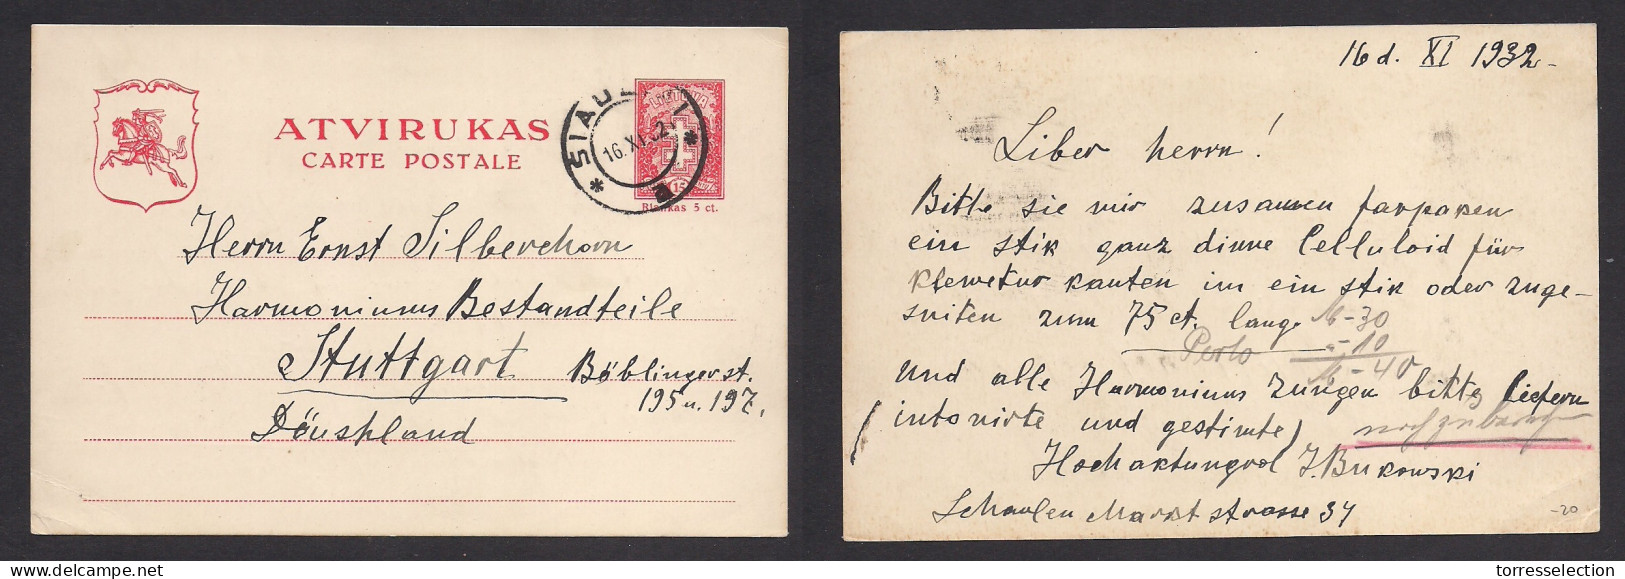 LITHUANIA. 1932 (16 Nov) SIAULIAI - Stuttgart, Germany. 5c Red Stat Card. Fine Used. XSALE. - Lithuania